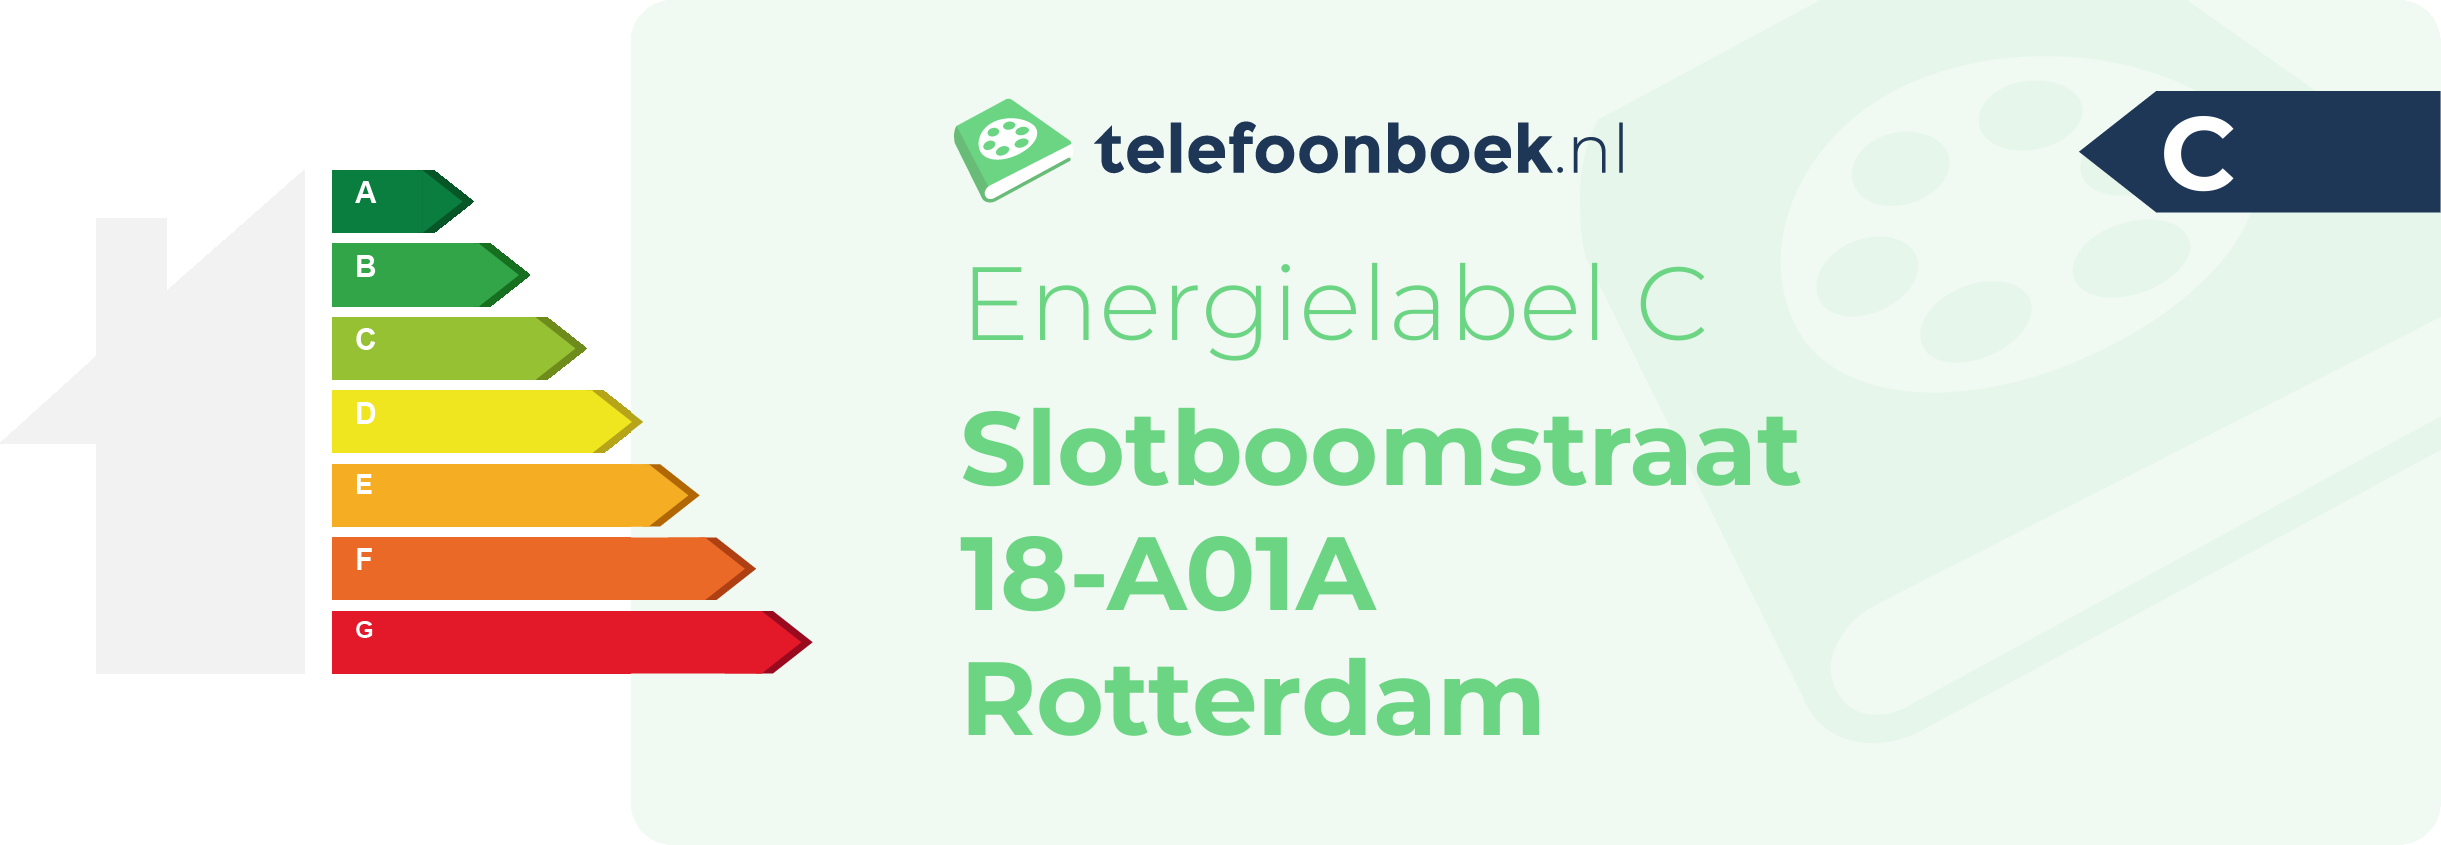 Energielabel Slotboomstraat 18-A01A Rotterdam